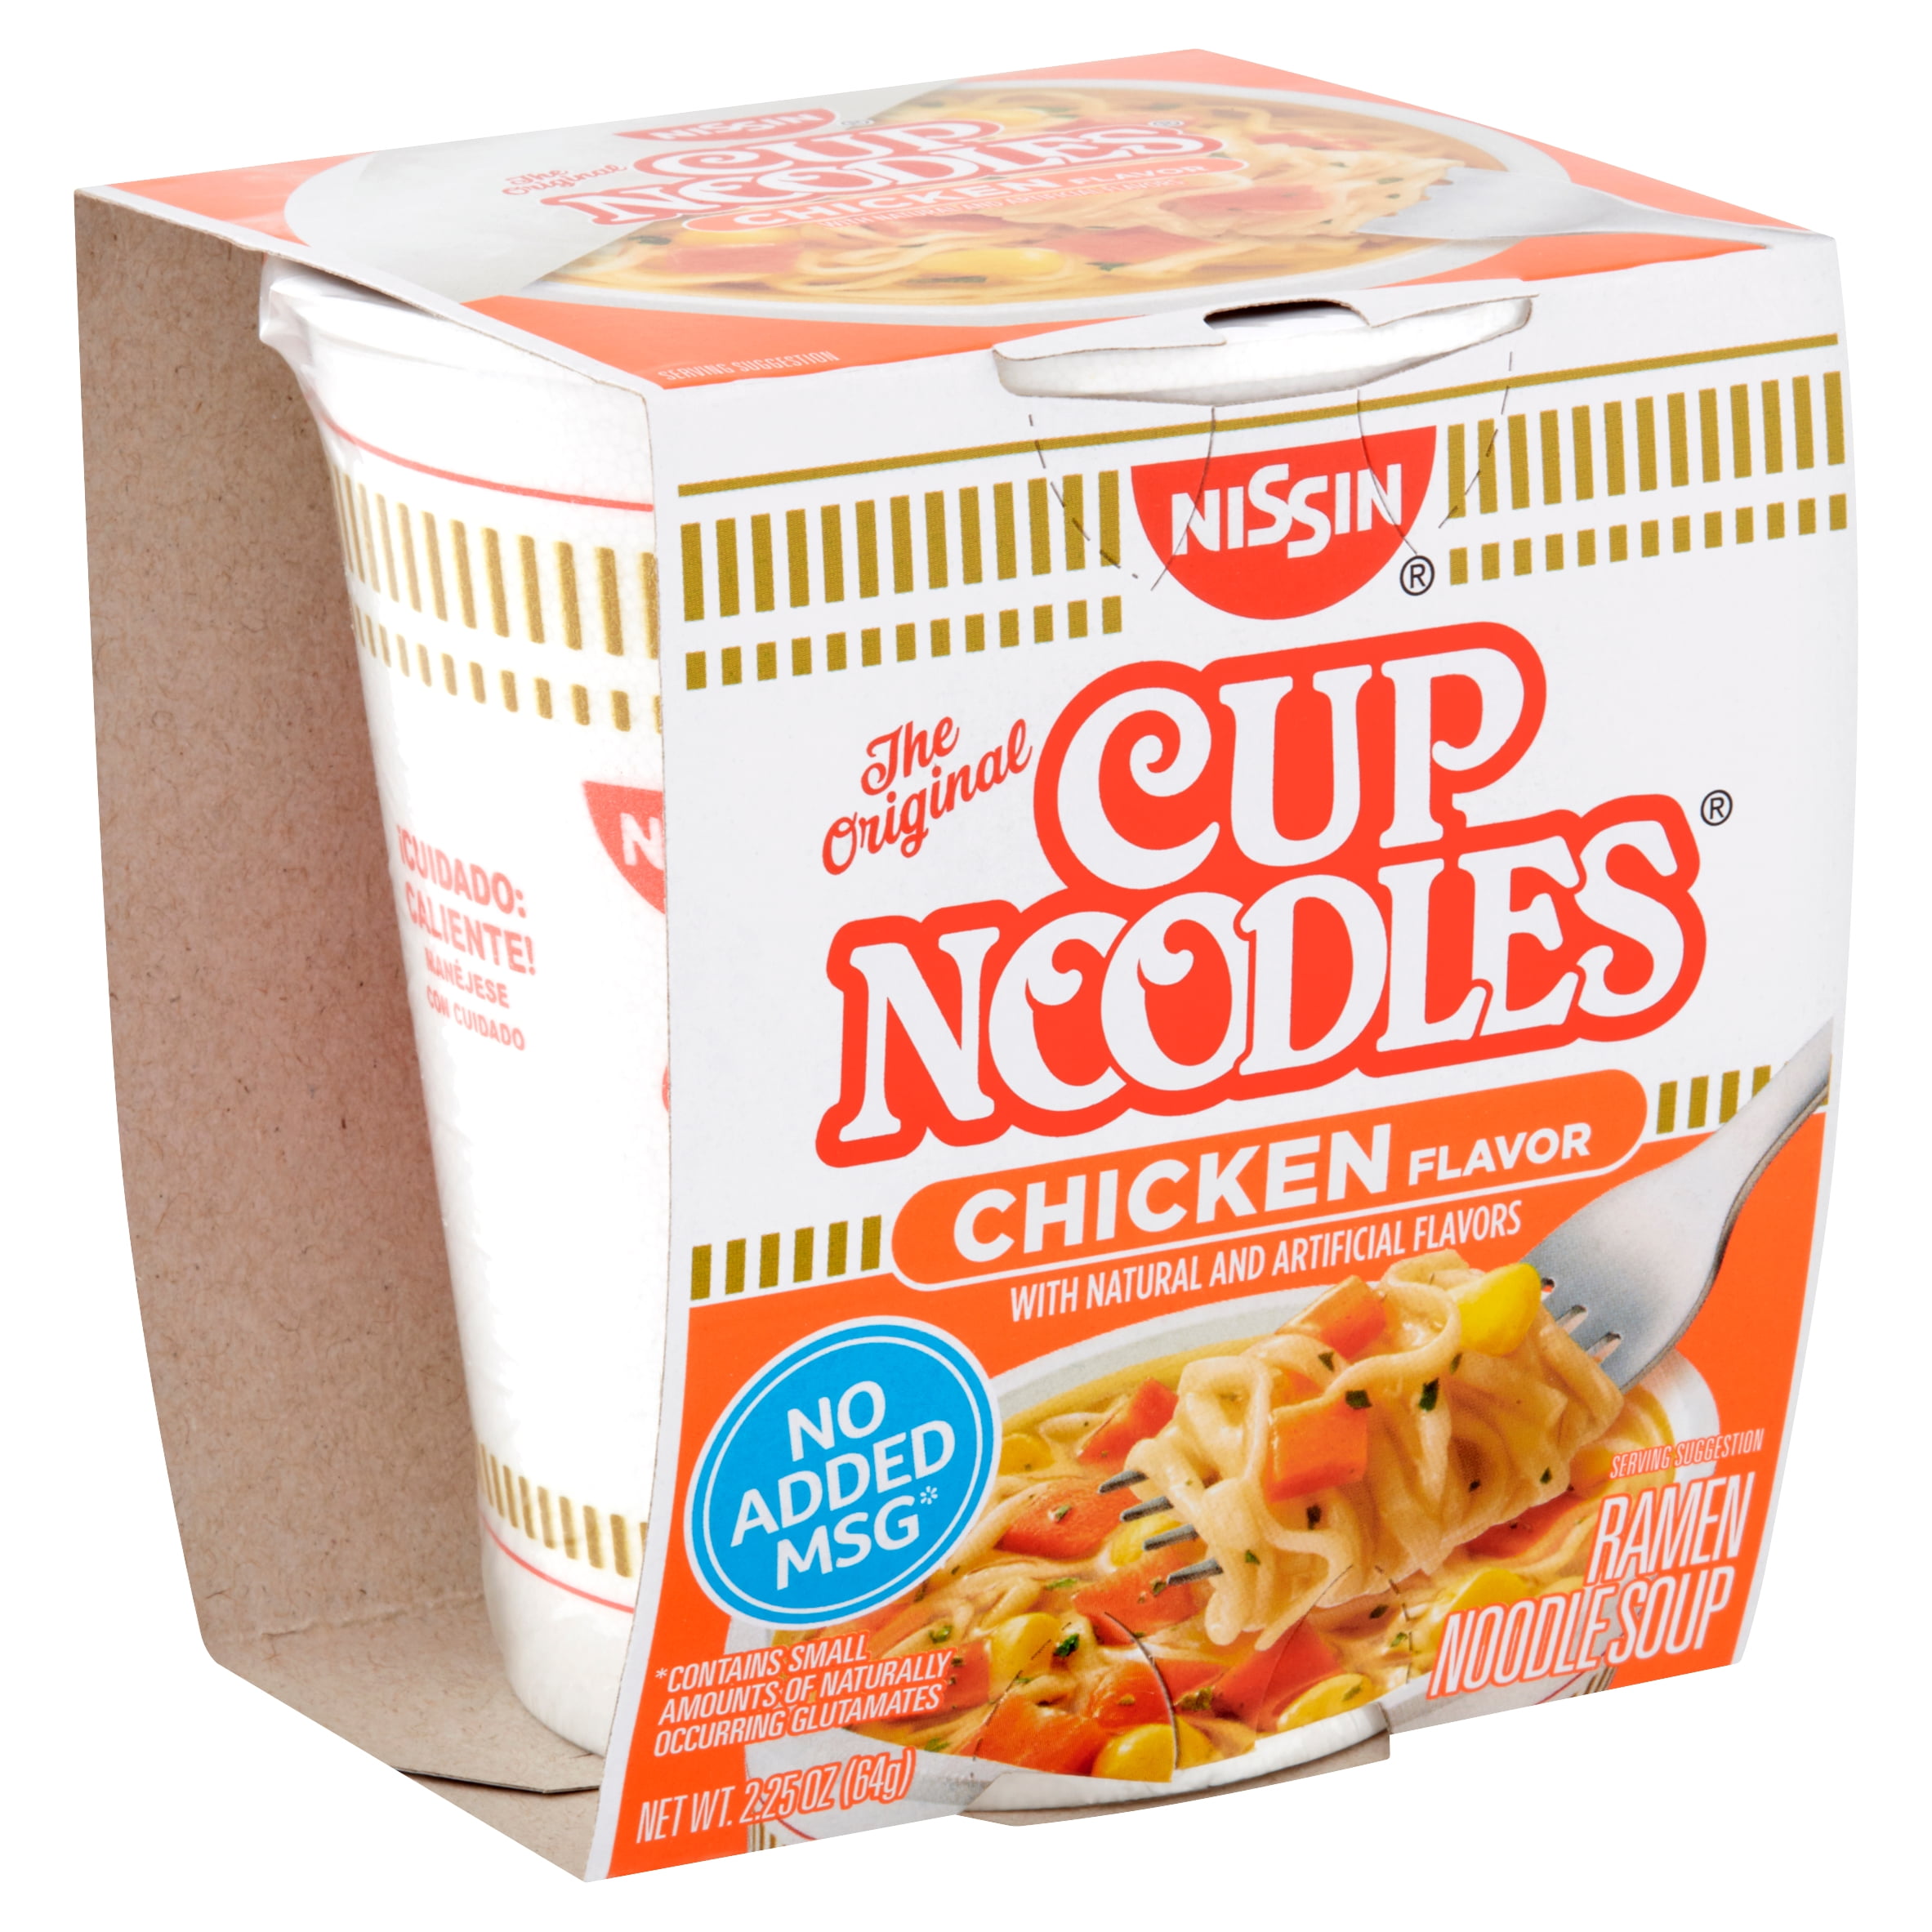 Nissin The Original Cup Noodles Chicken Flavor Ramen Noodle Soup 2 25 Oz Walmart Com Walmart Com